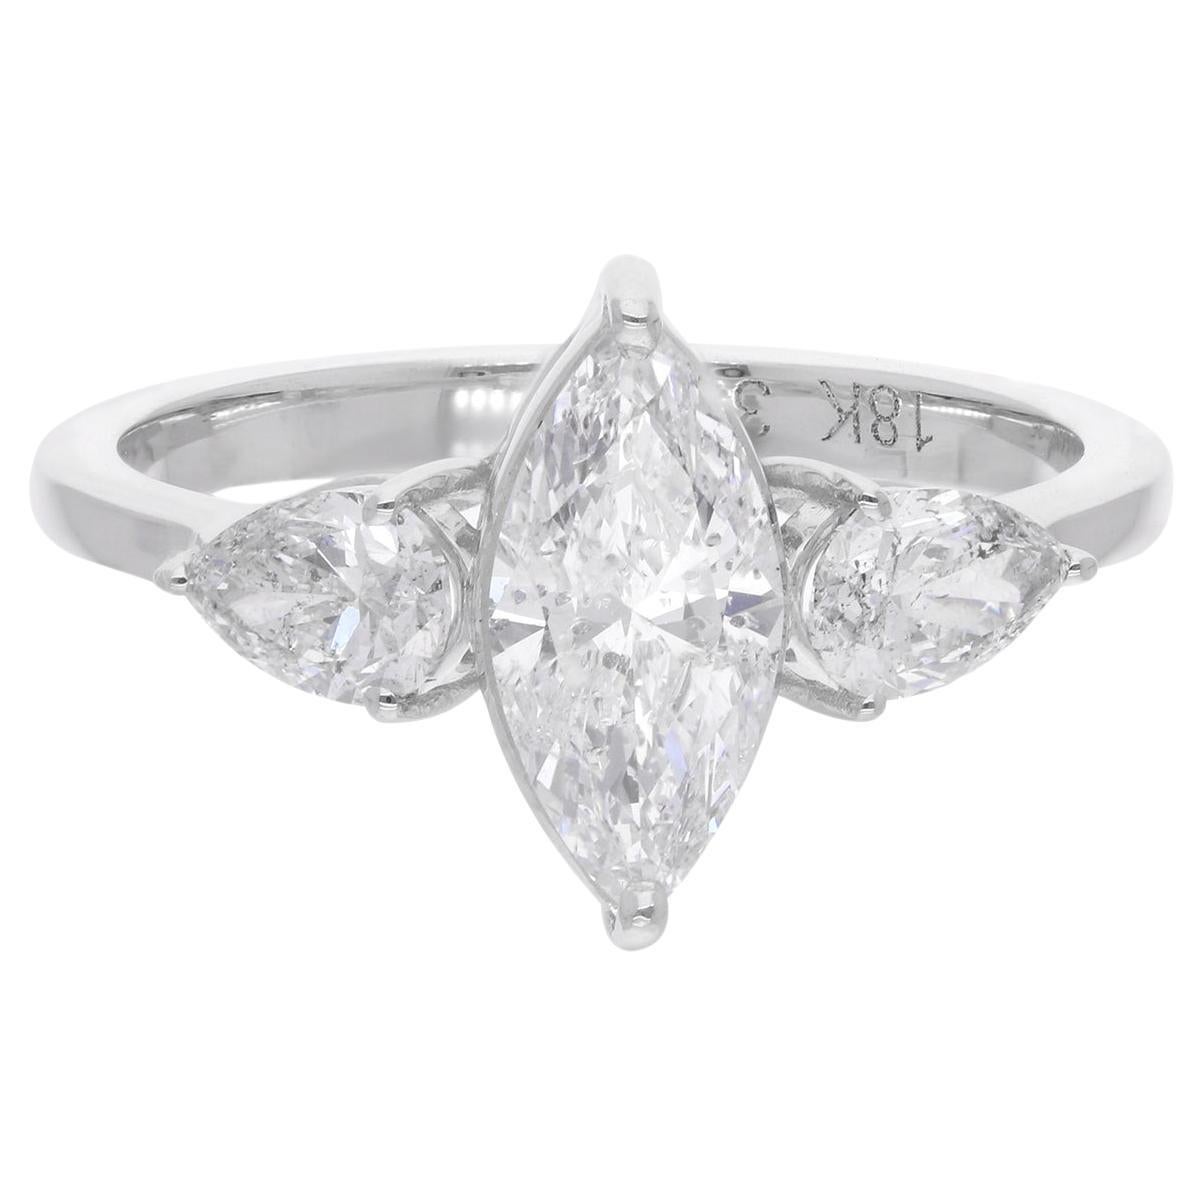 1.64 Carat Marquise & Pear Diamond Ring 18 Karat White Gold Handmade Jewelry For Sale